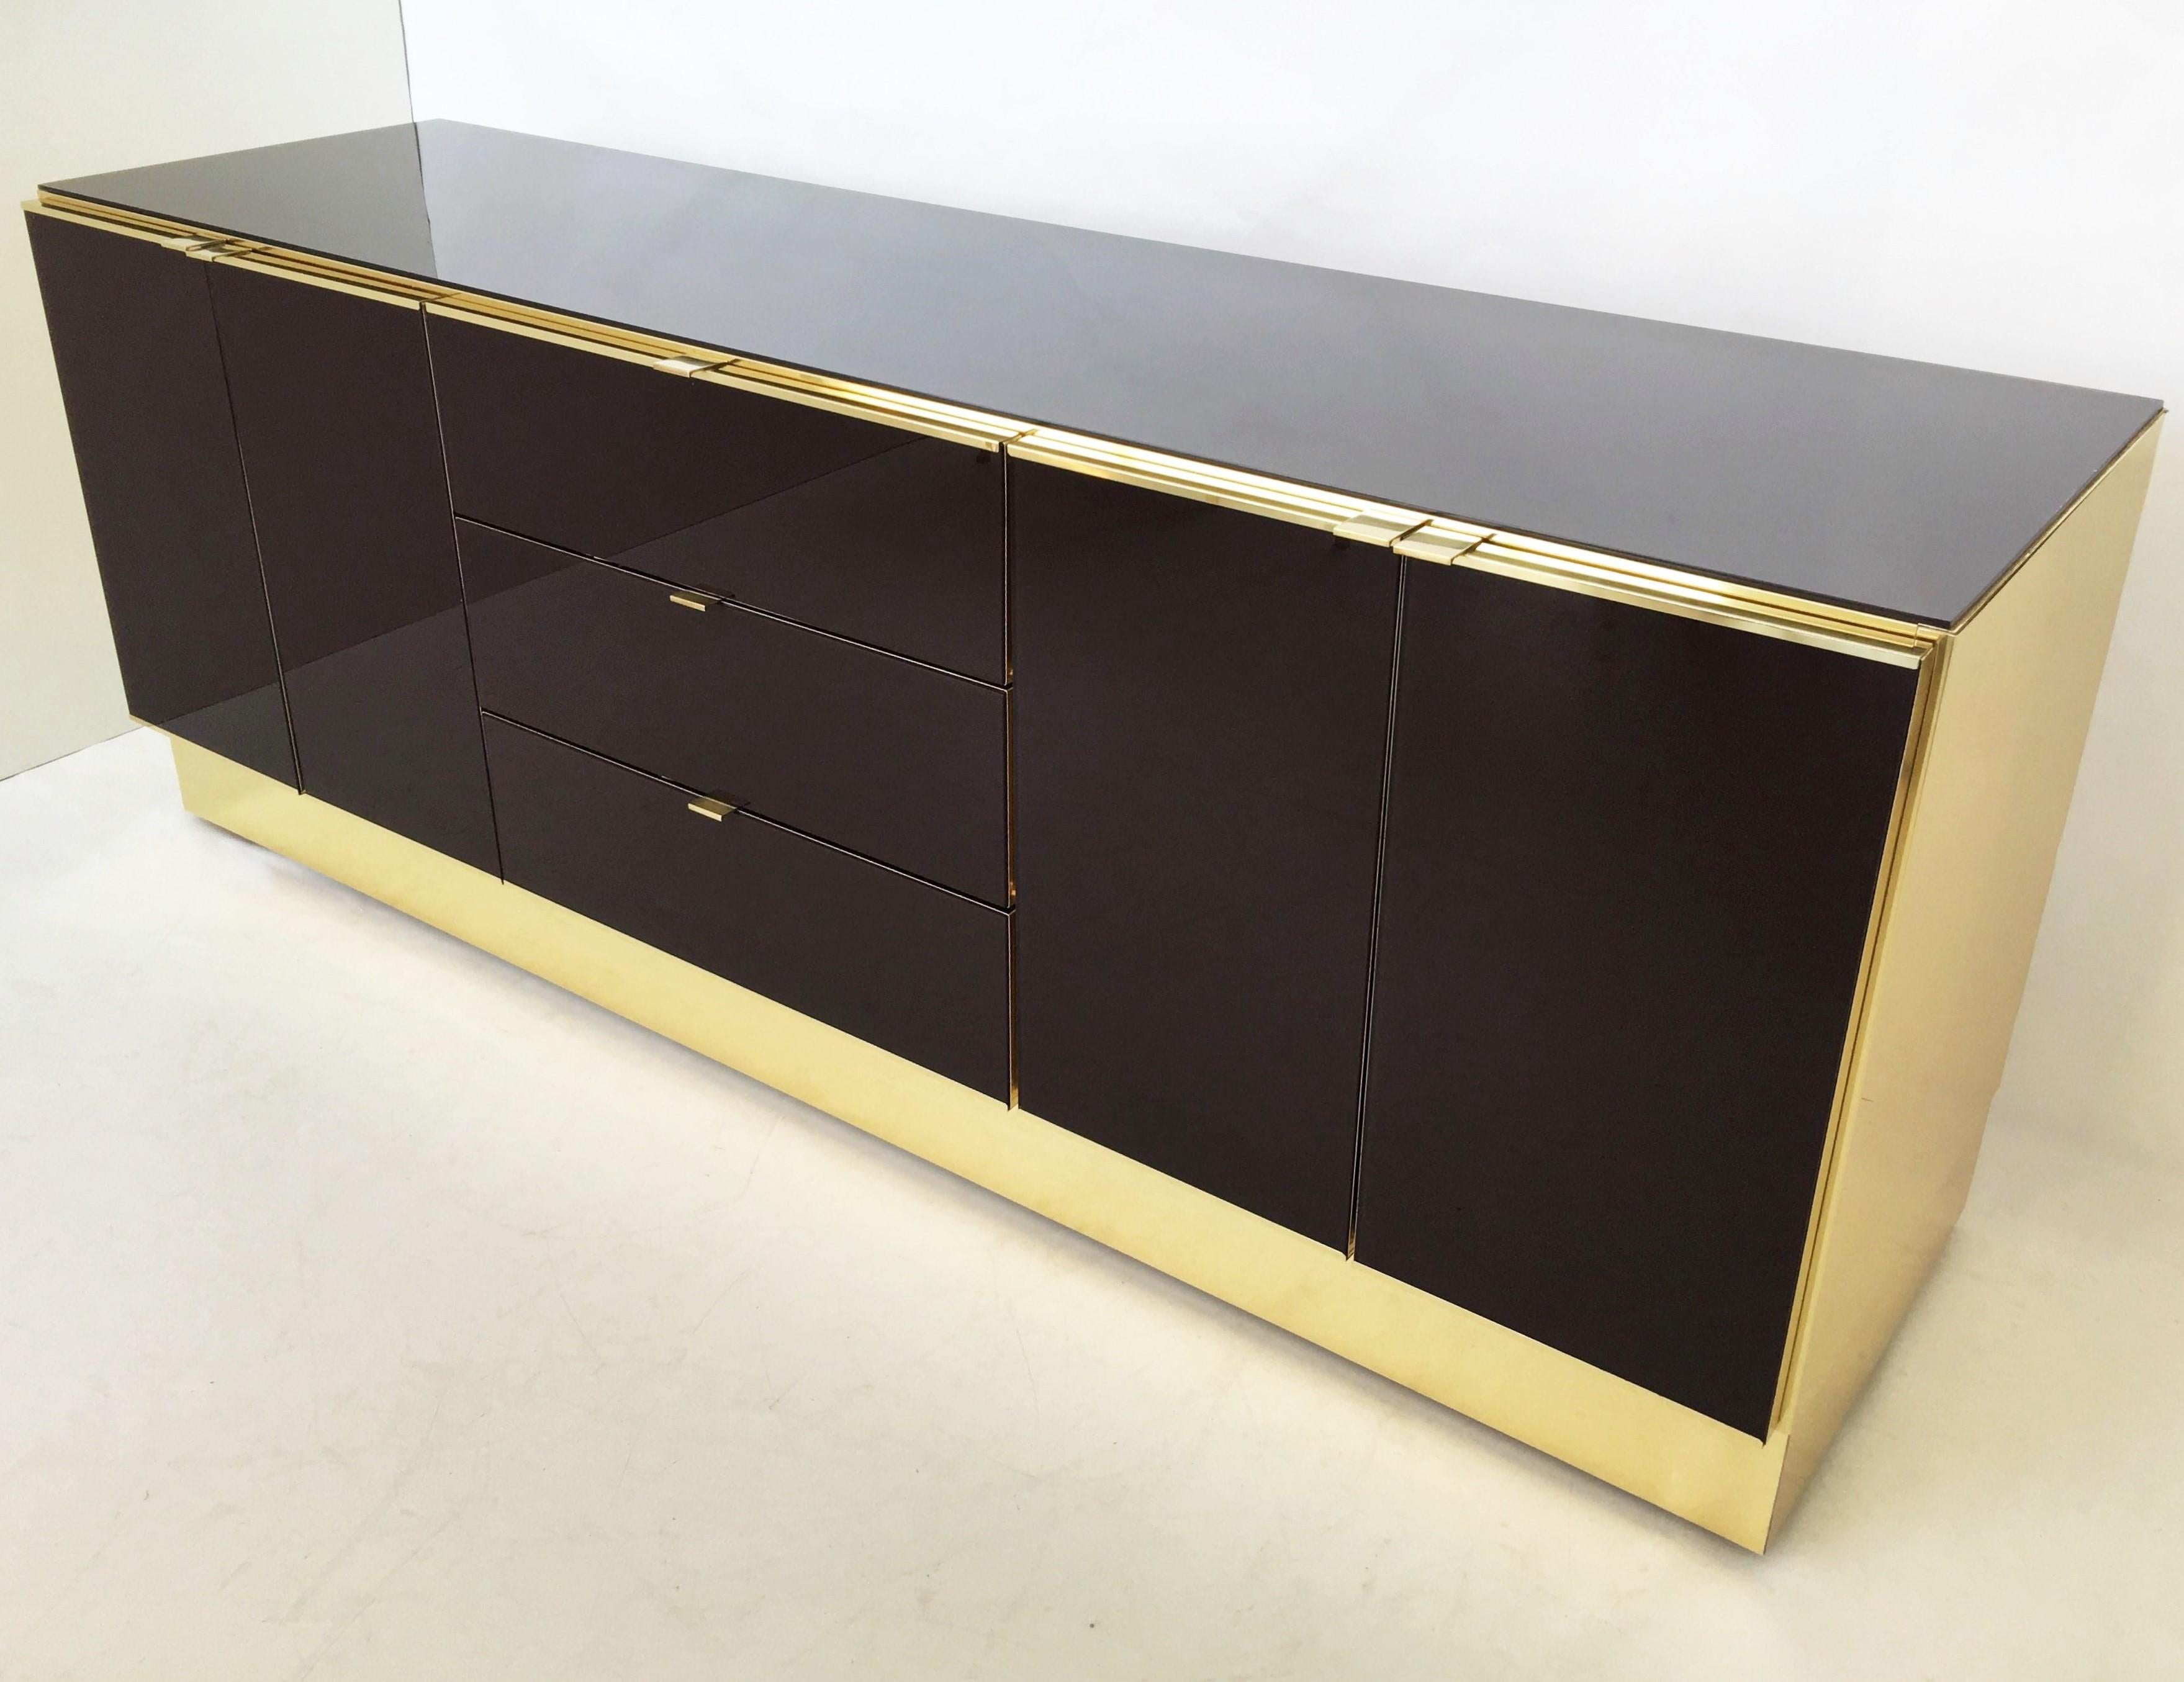 Spectacular Mirrored and Brass Dresser/Credenza by Ello Furniture 1